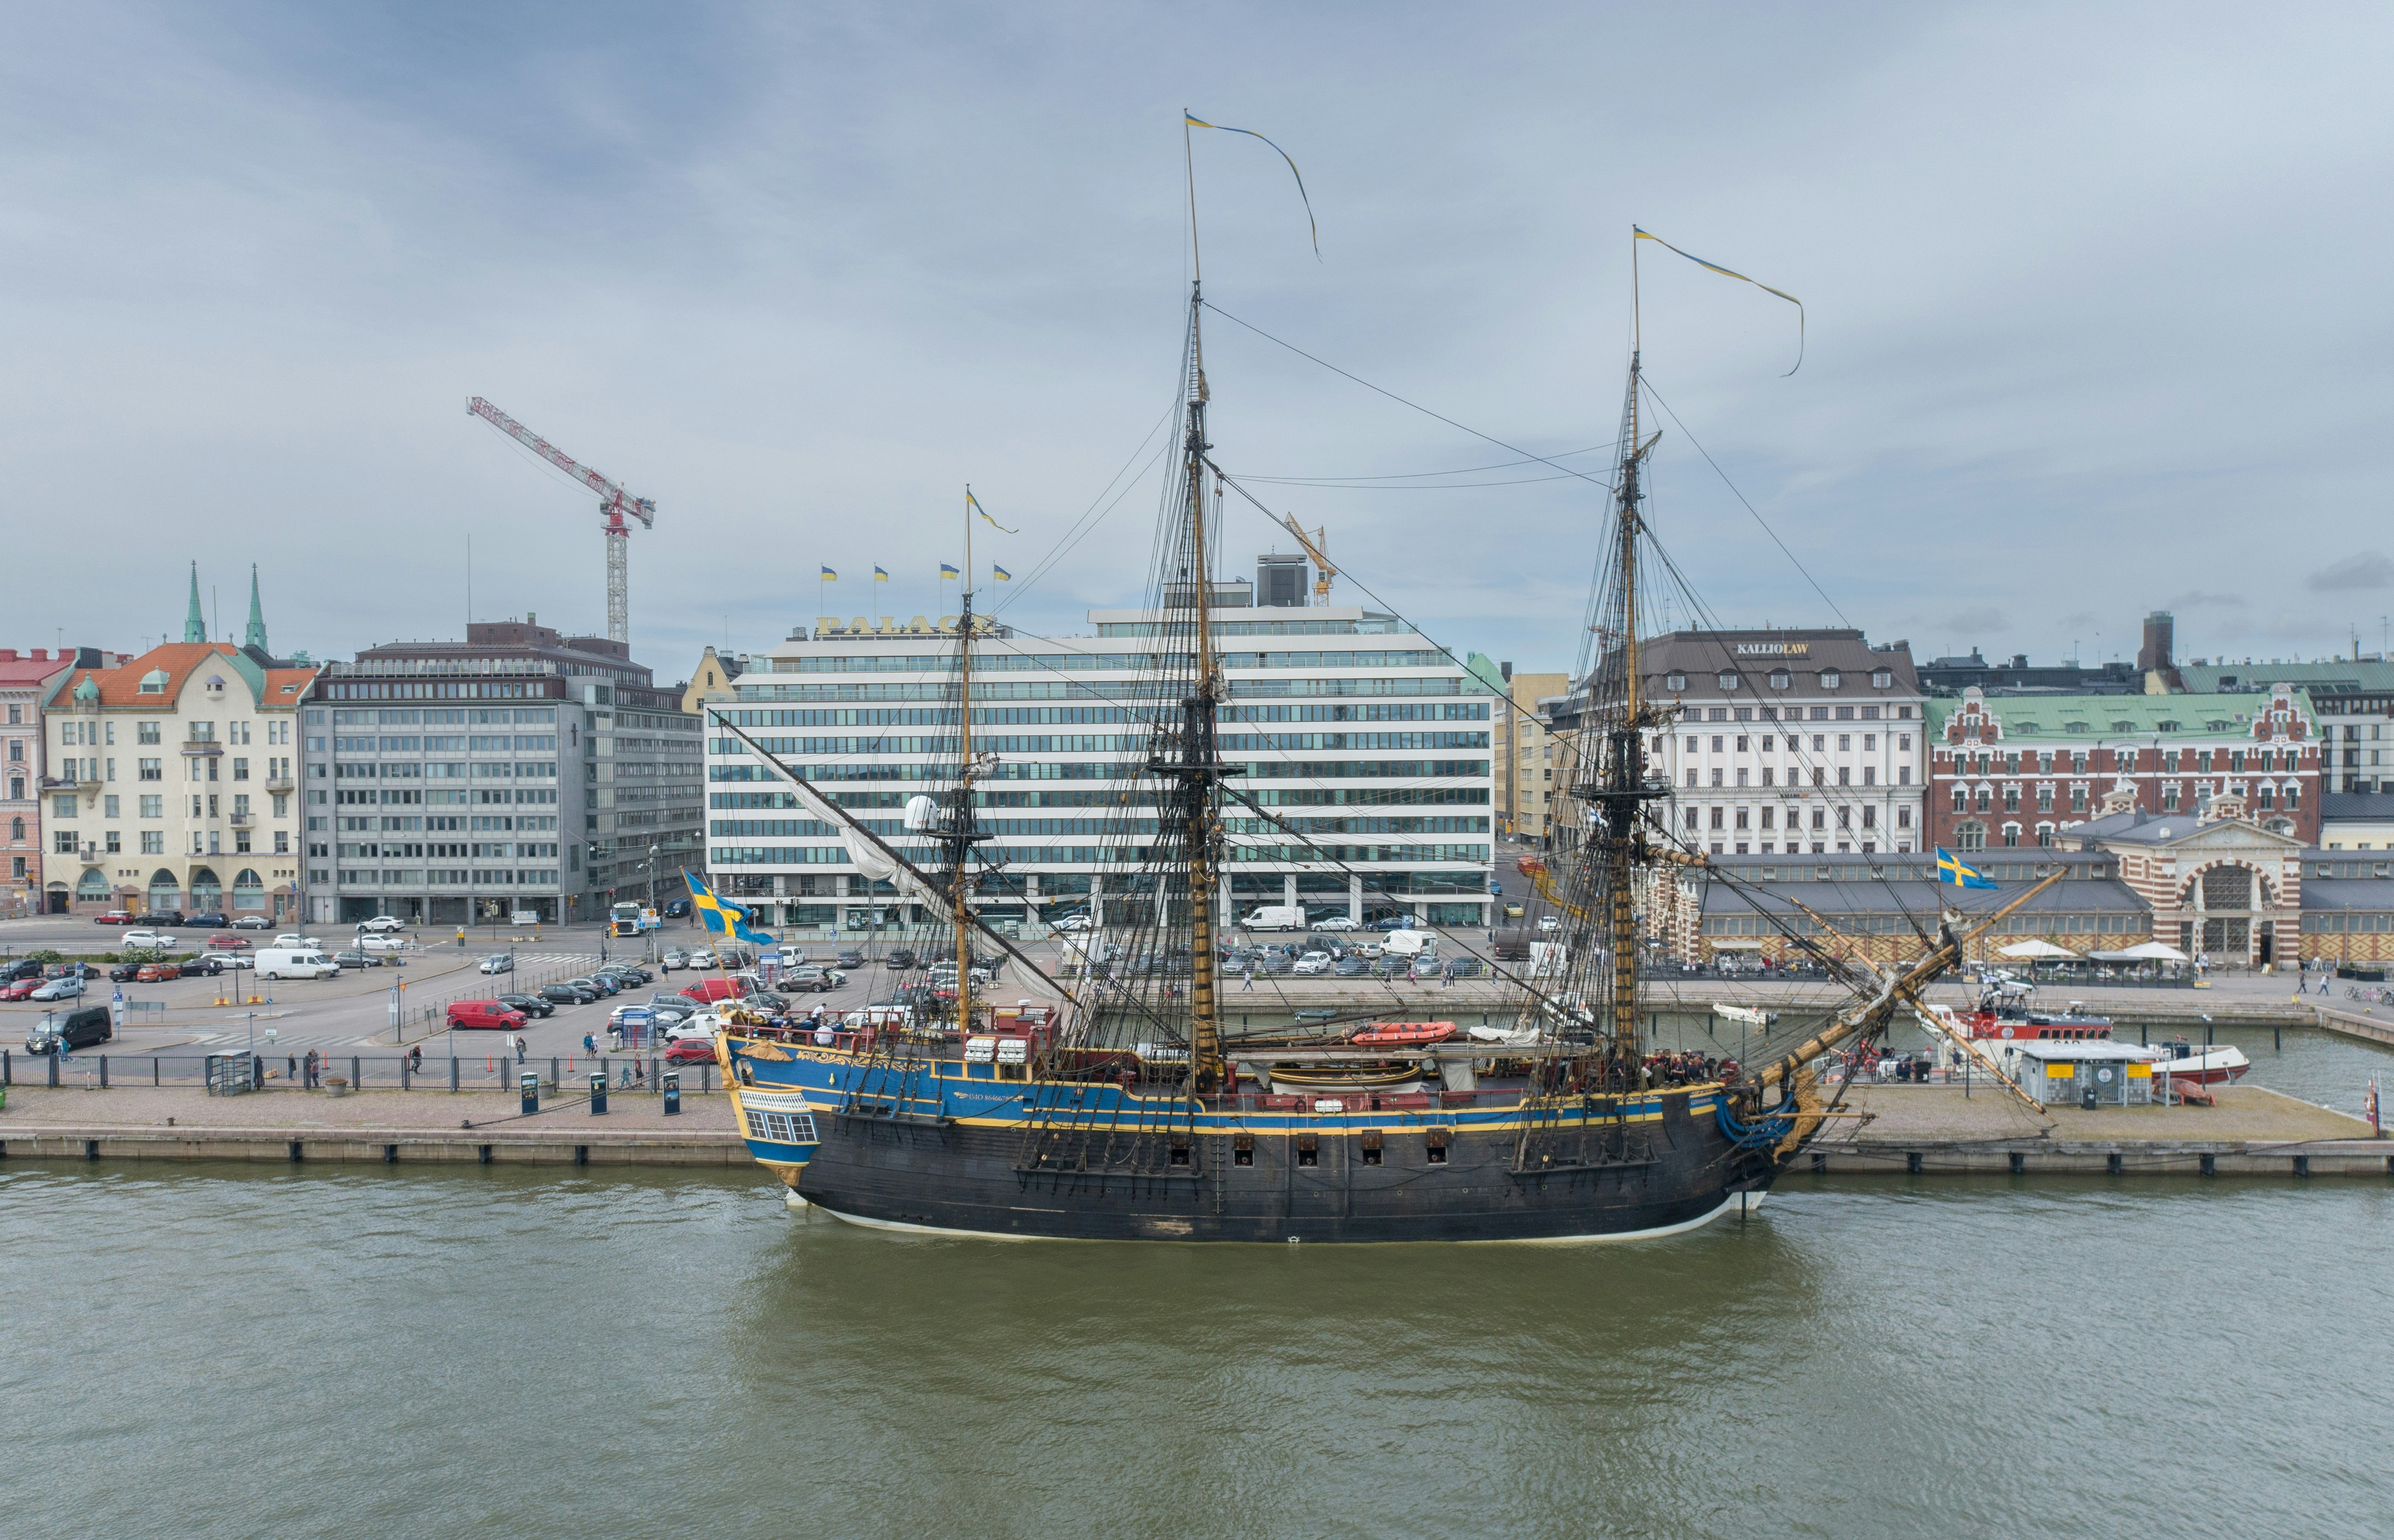 The Gotheborg moored in Helsinki. Source.